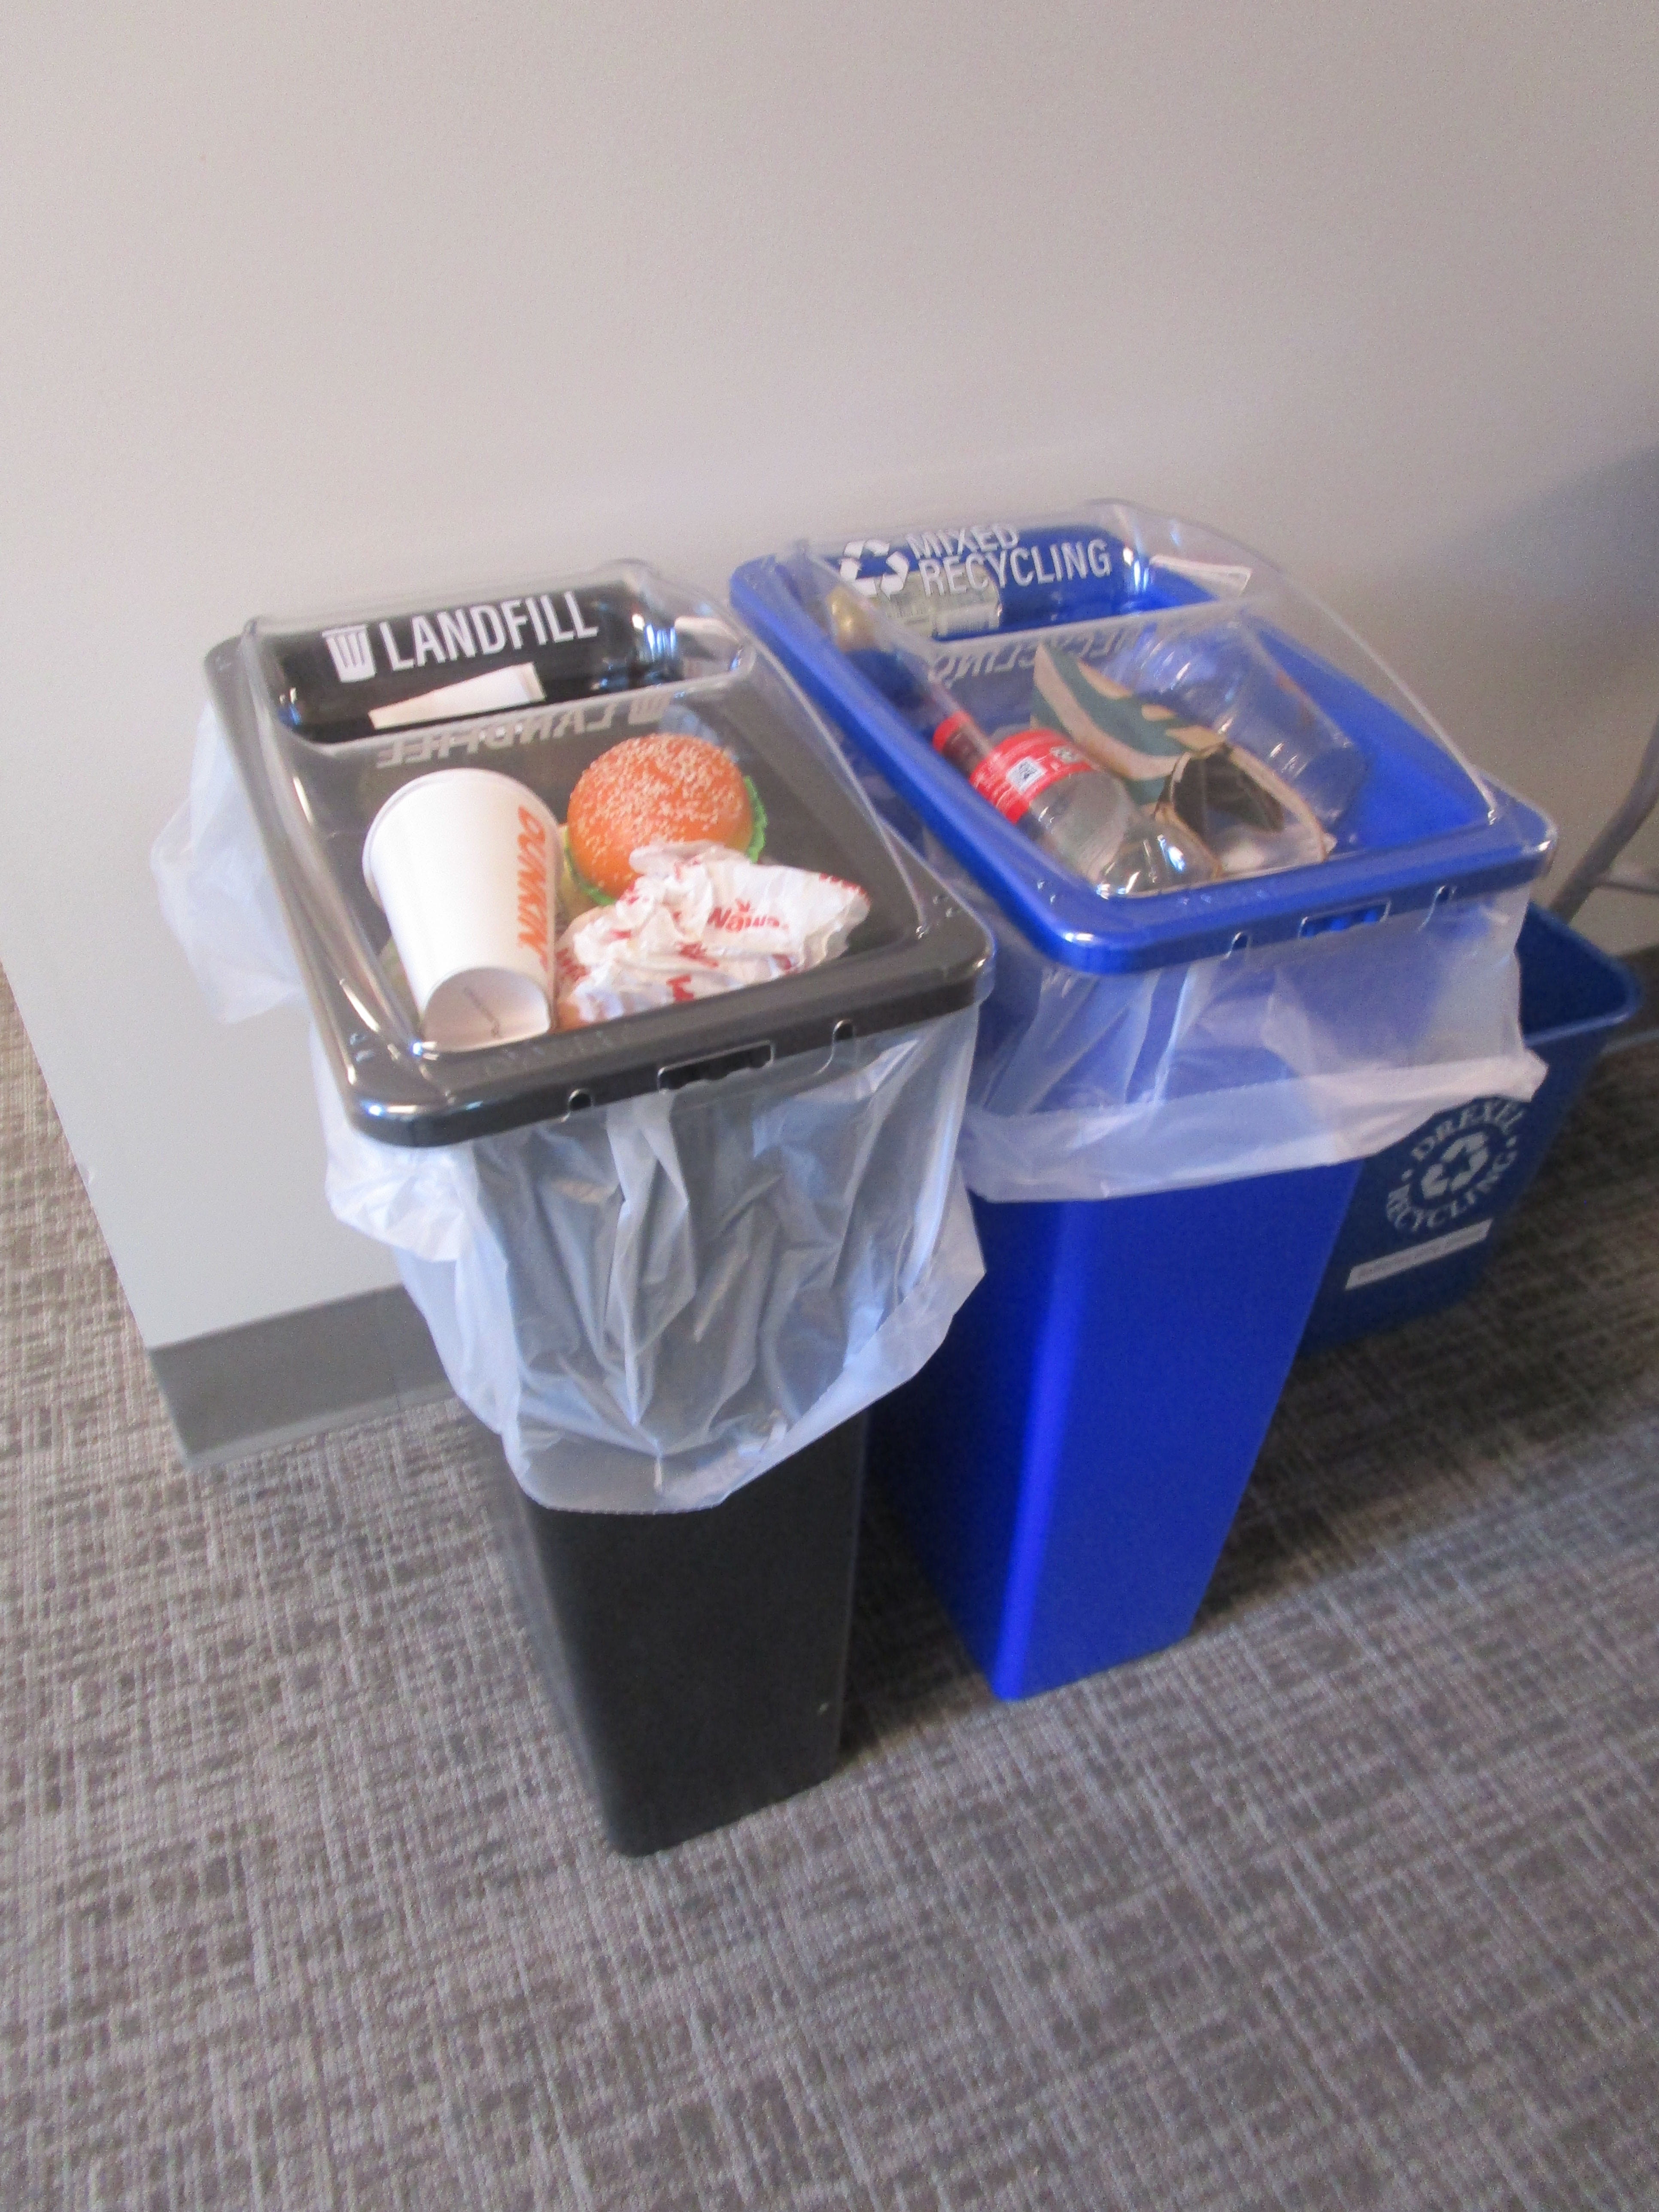 A black garbage bin next to a blue recycling bin.